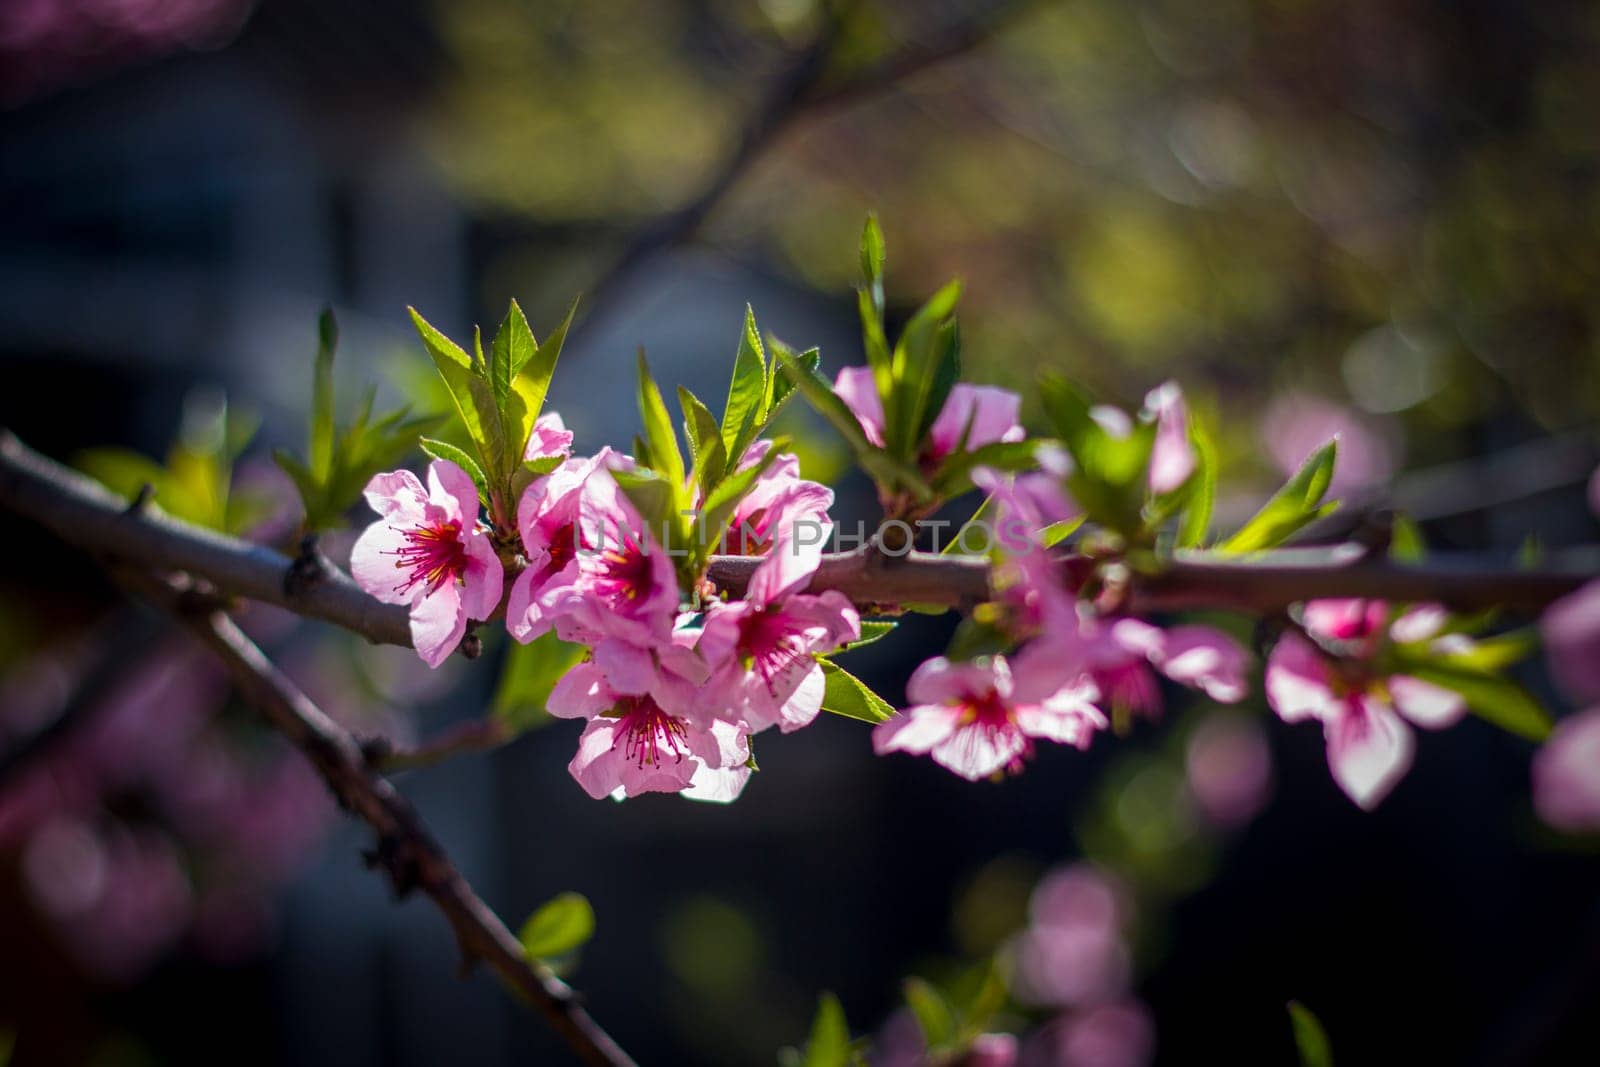 Spring peach nectarine blossom on tree. Agriculture beautiful season farming springtime landscape